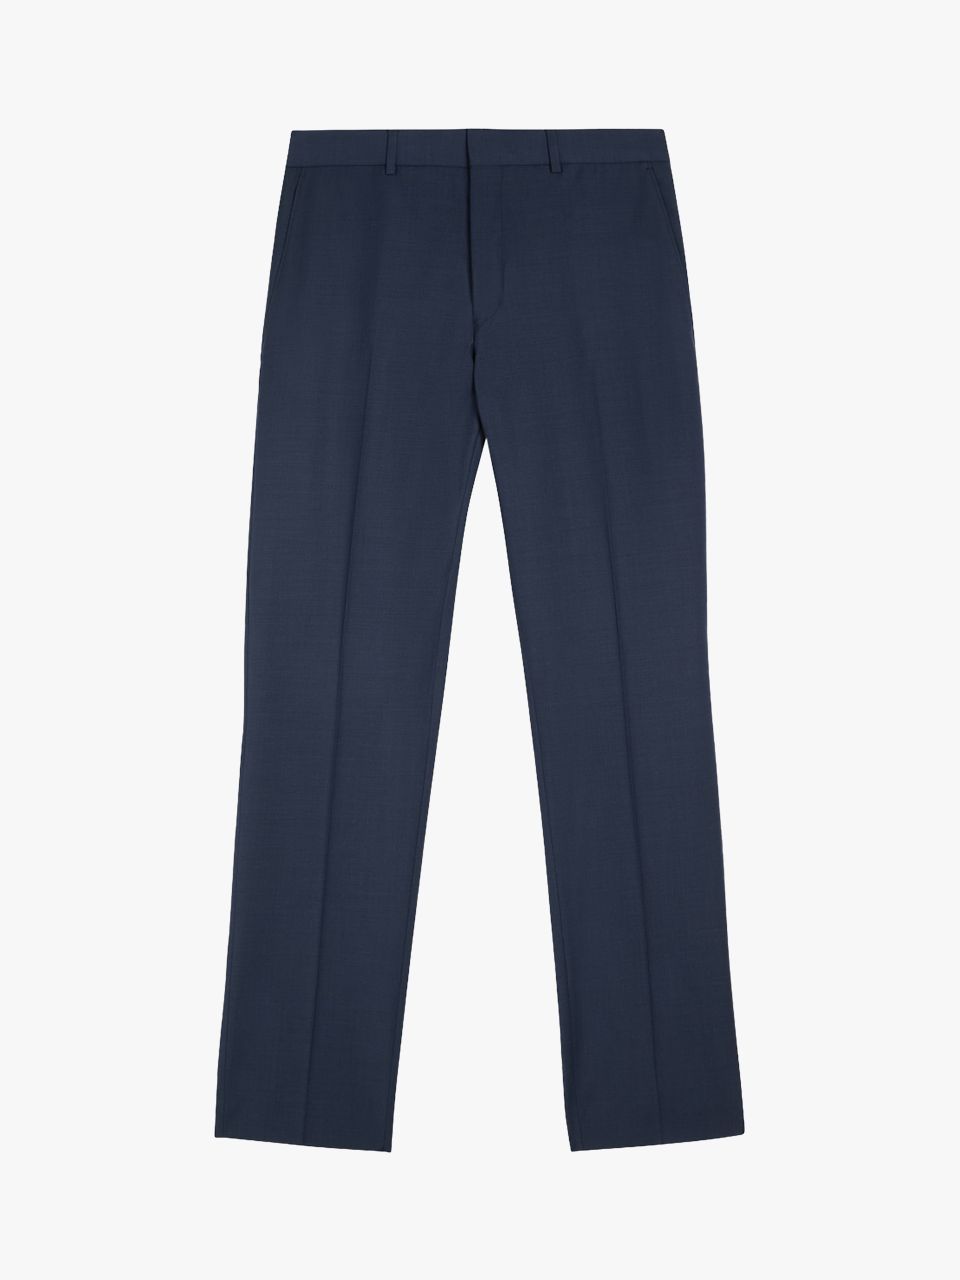 Ted Baker Wool Blend Slim Panama Suit Trousers, Blue, 32S